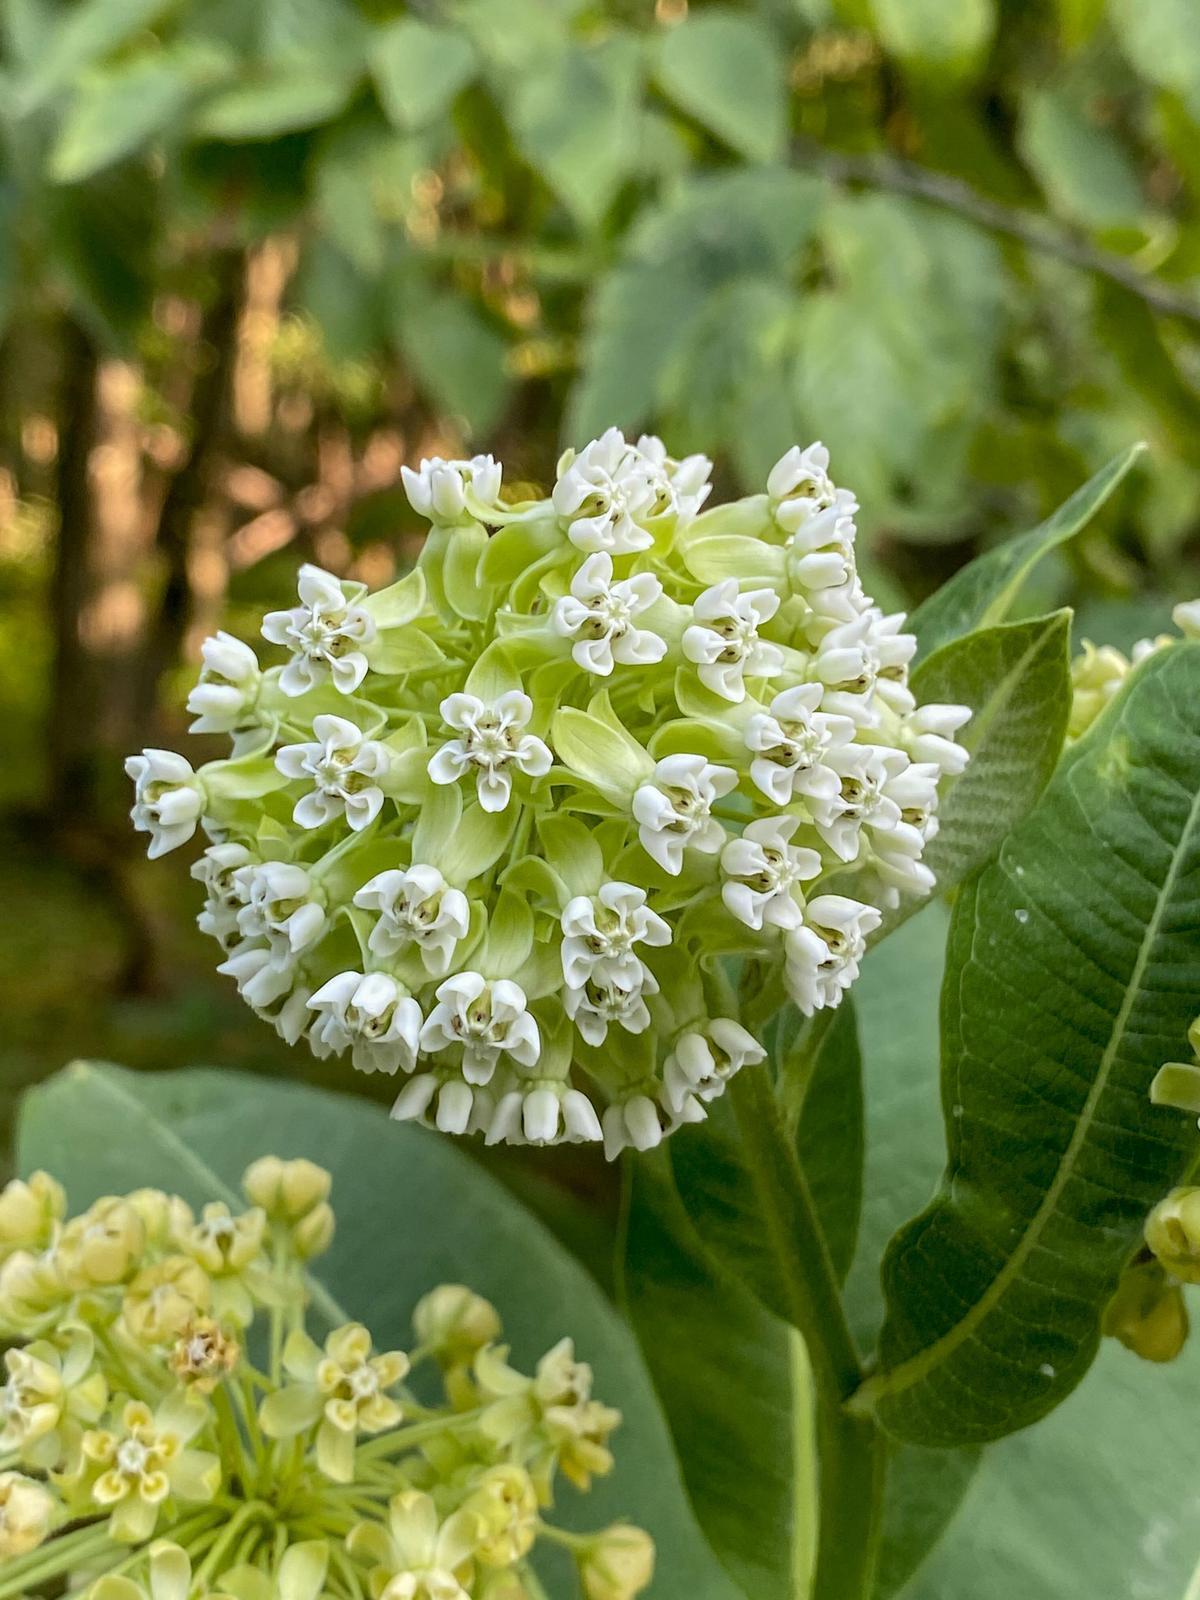 Common milkweed Photo by Ashley Bradford